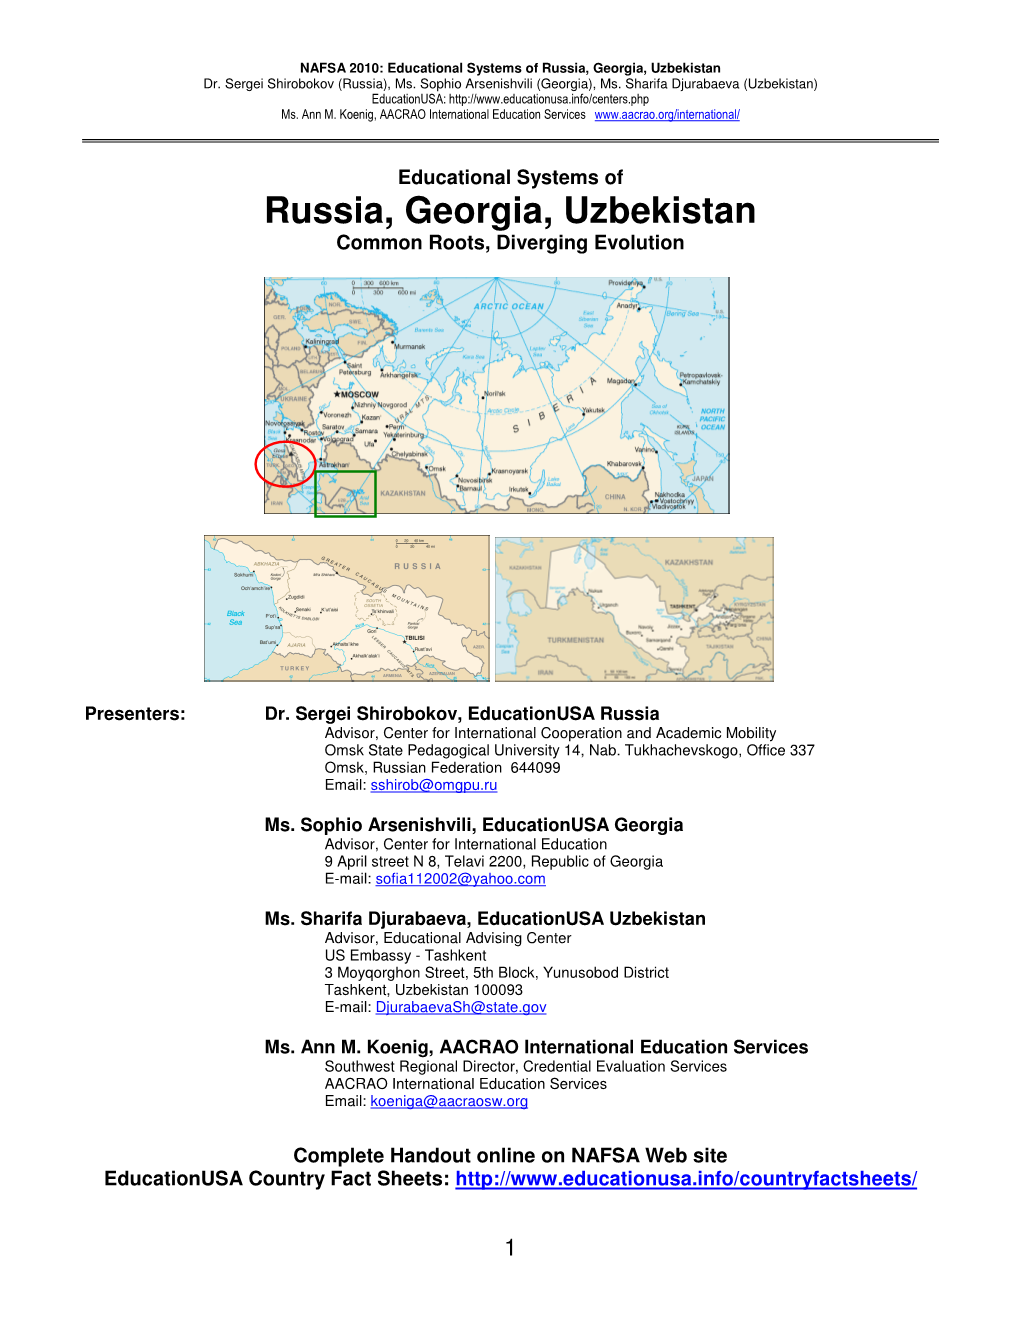 Educational Systems of Russia-Georgia-Uzbekistan